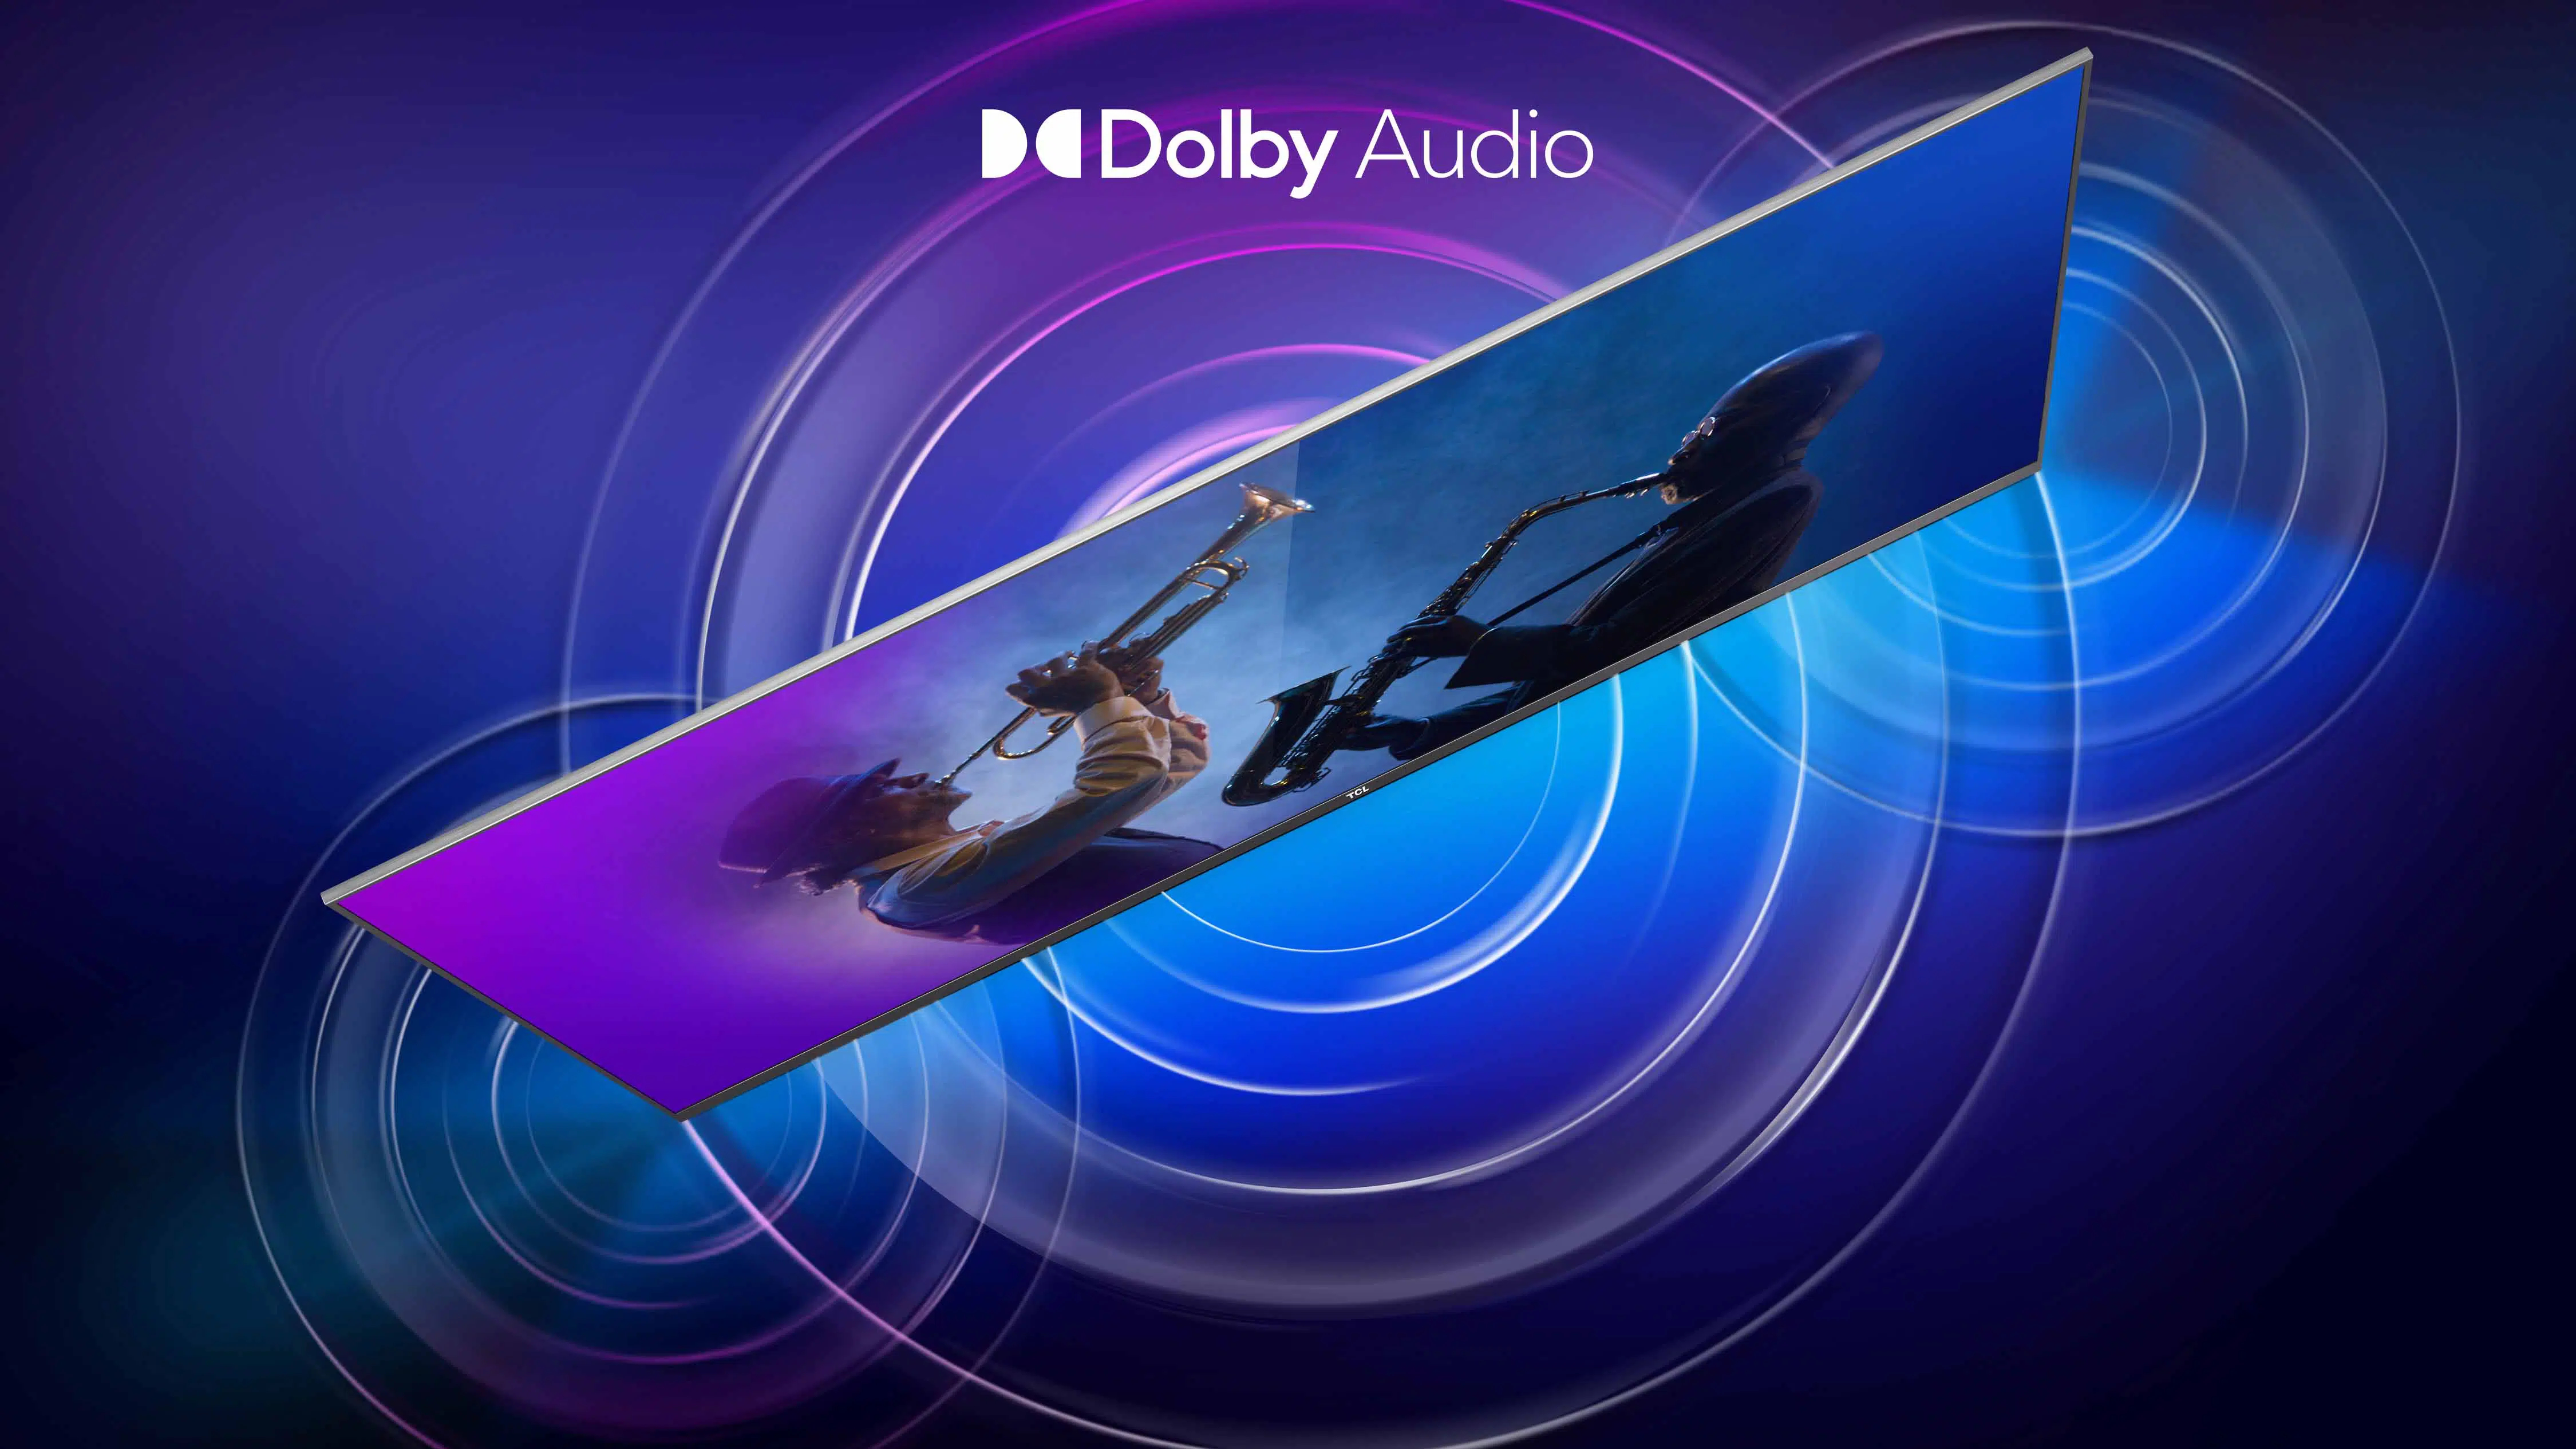 Dolby Audio ofera un sunet bogat, clar si puternic in televizor.